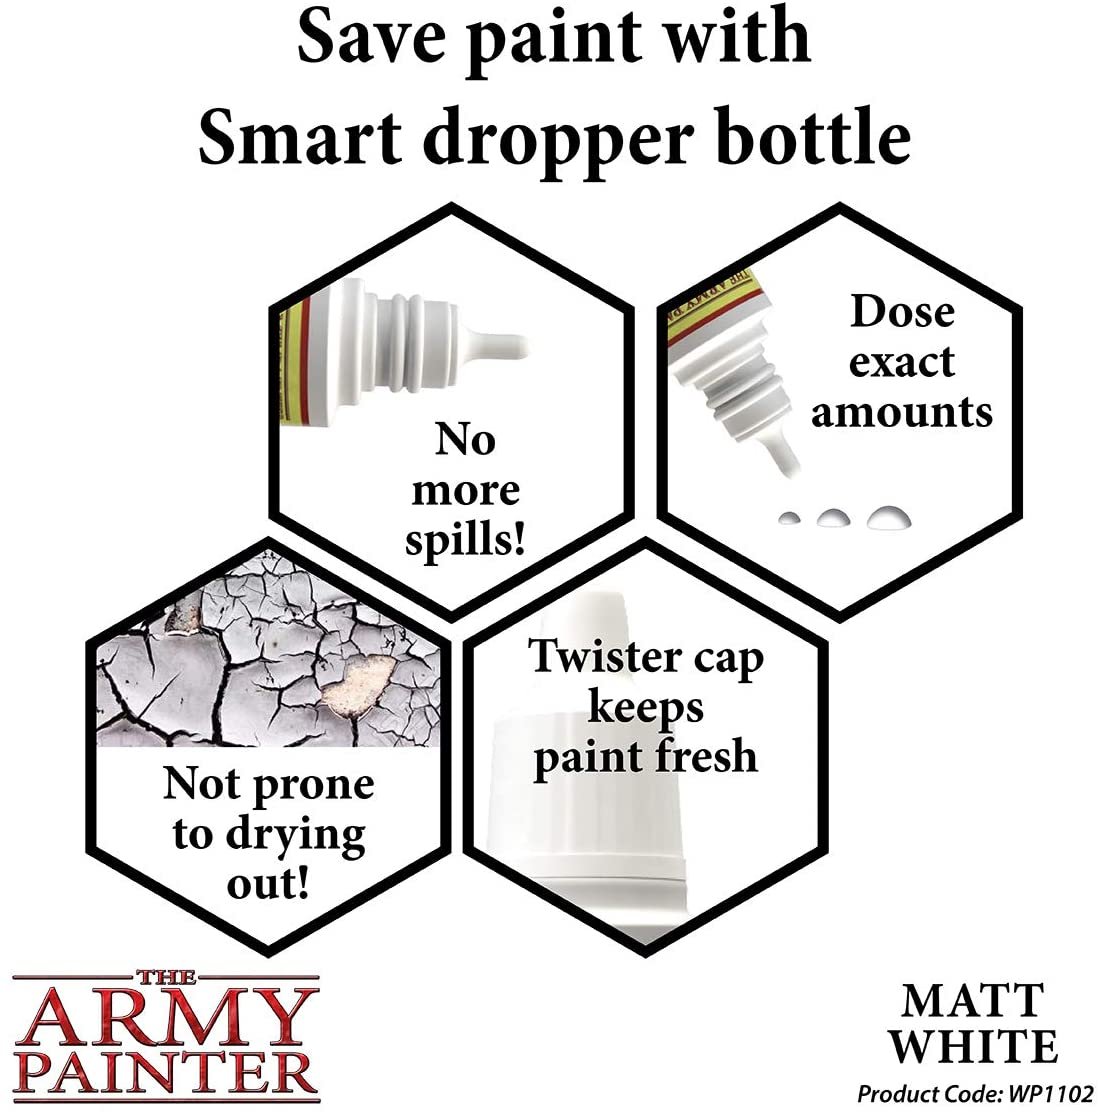 The Army Painter - Warpaints: Matt White (18ml/0.6oz)